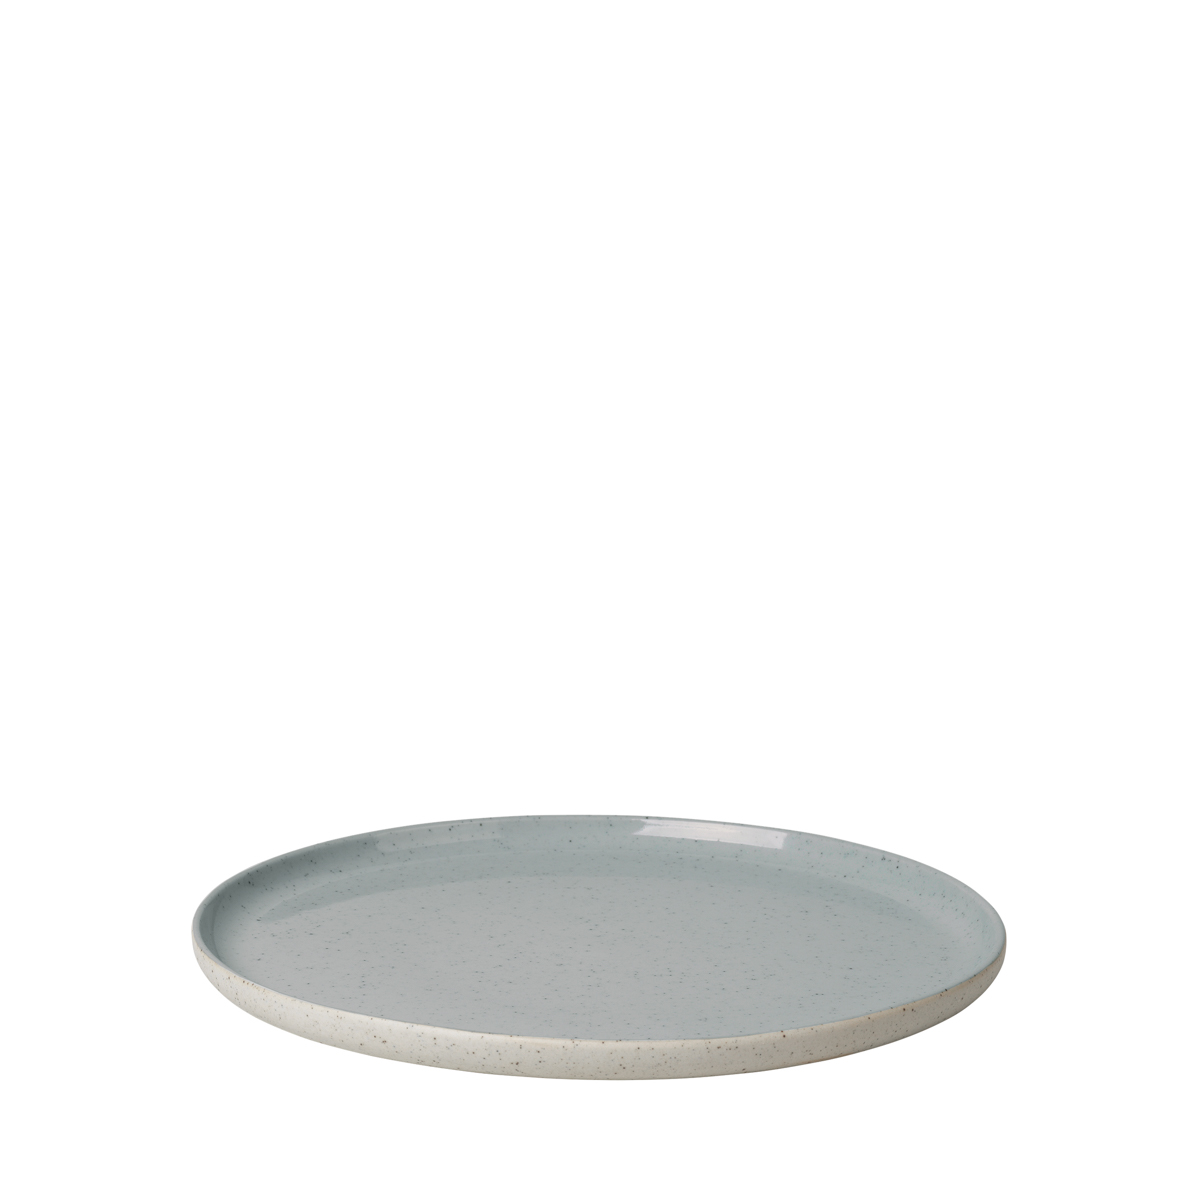 Dessertteller -SABLO- Stone, Ø 21 cm. Material: Keramik. Von Blomus.